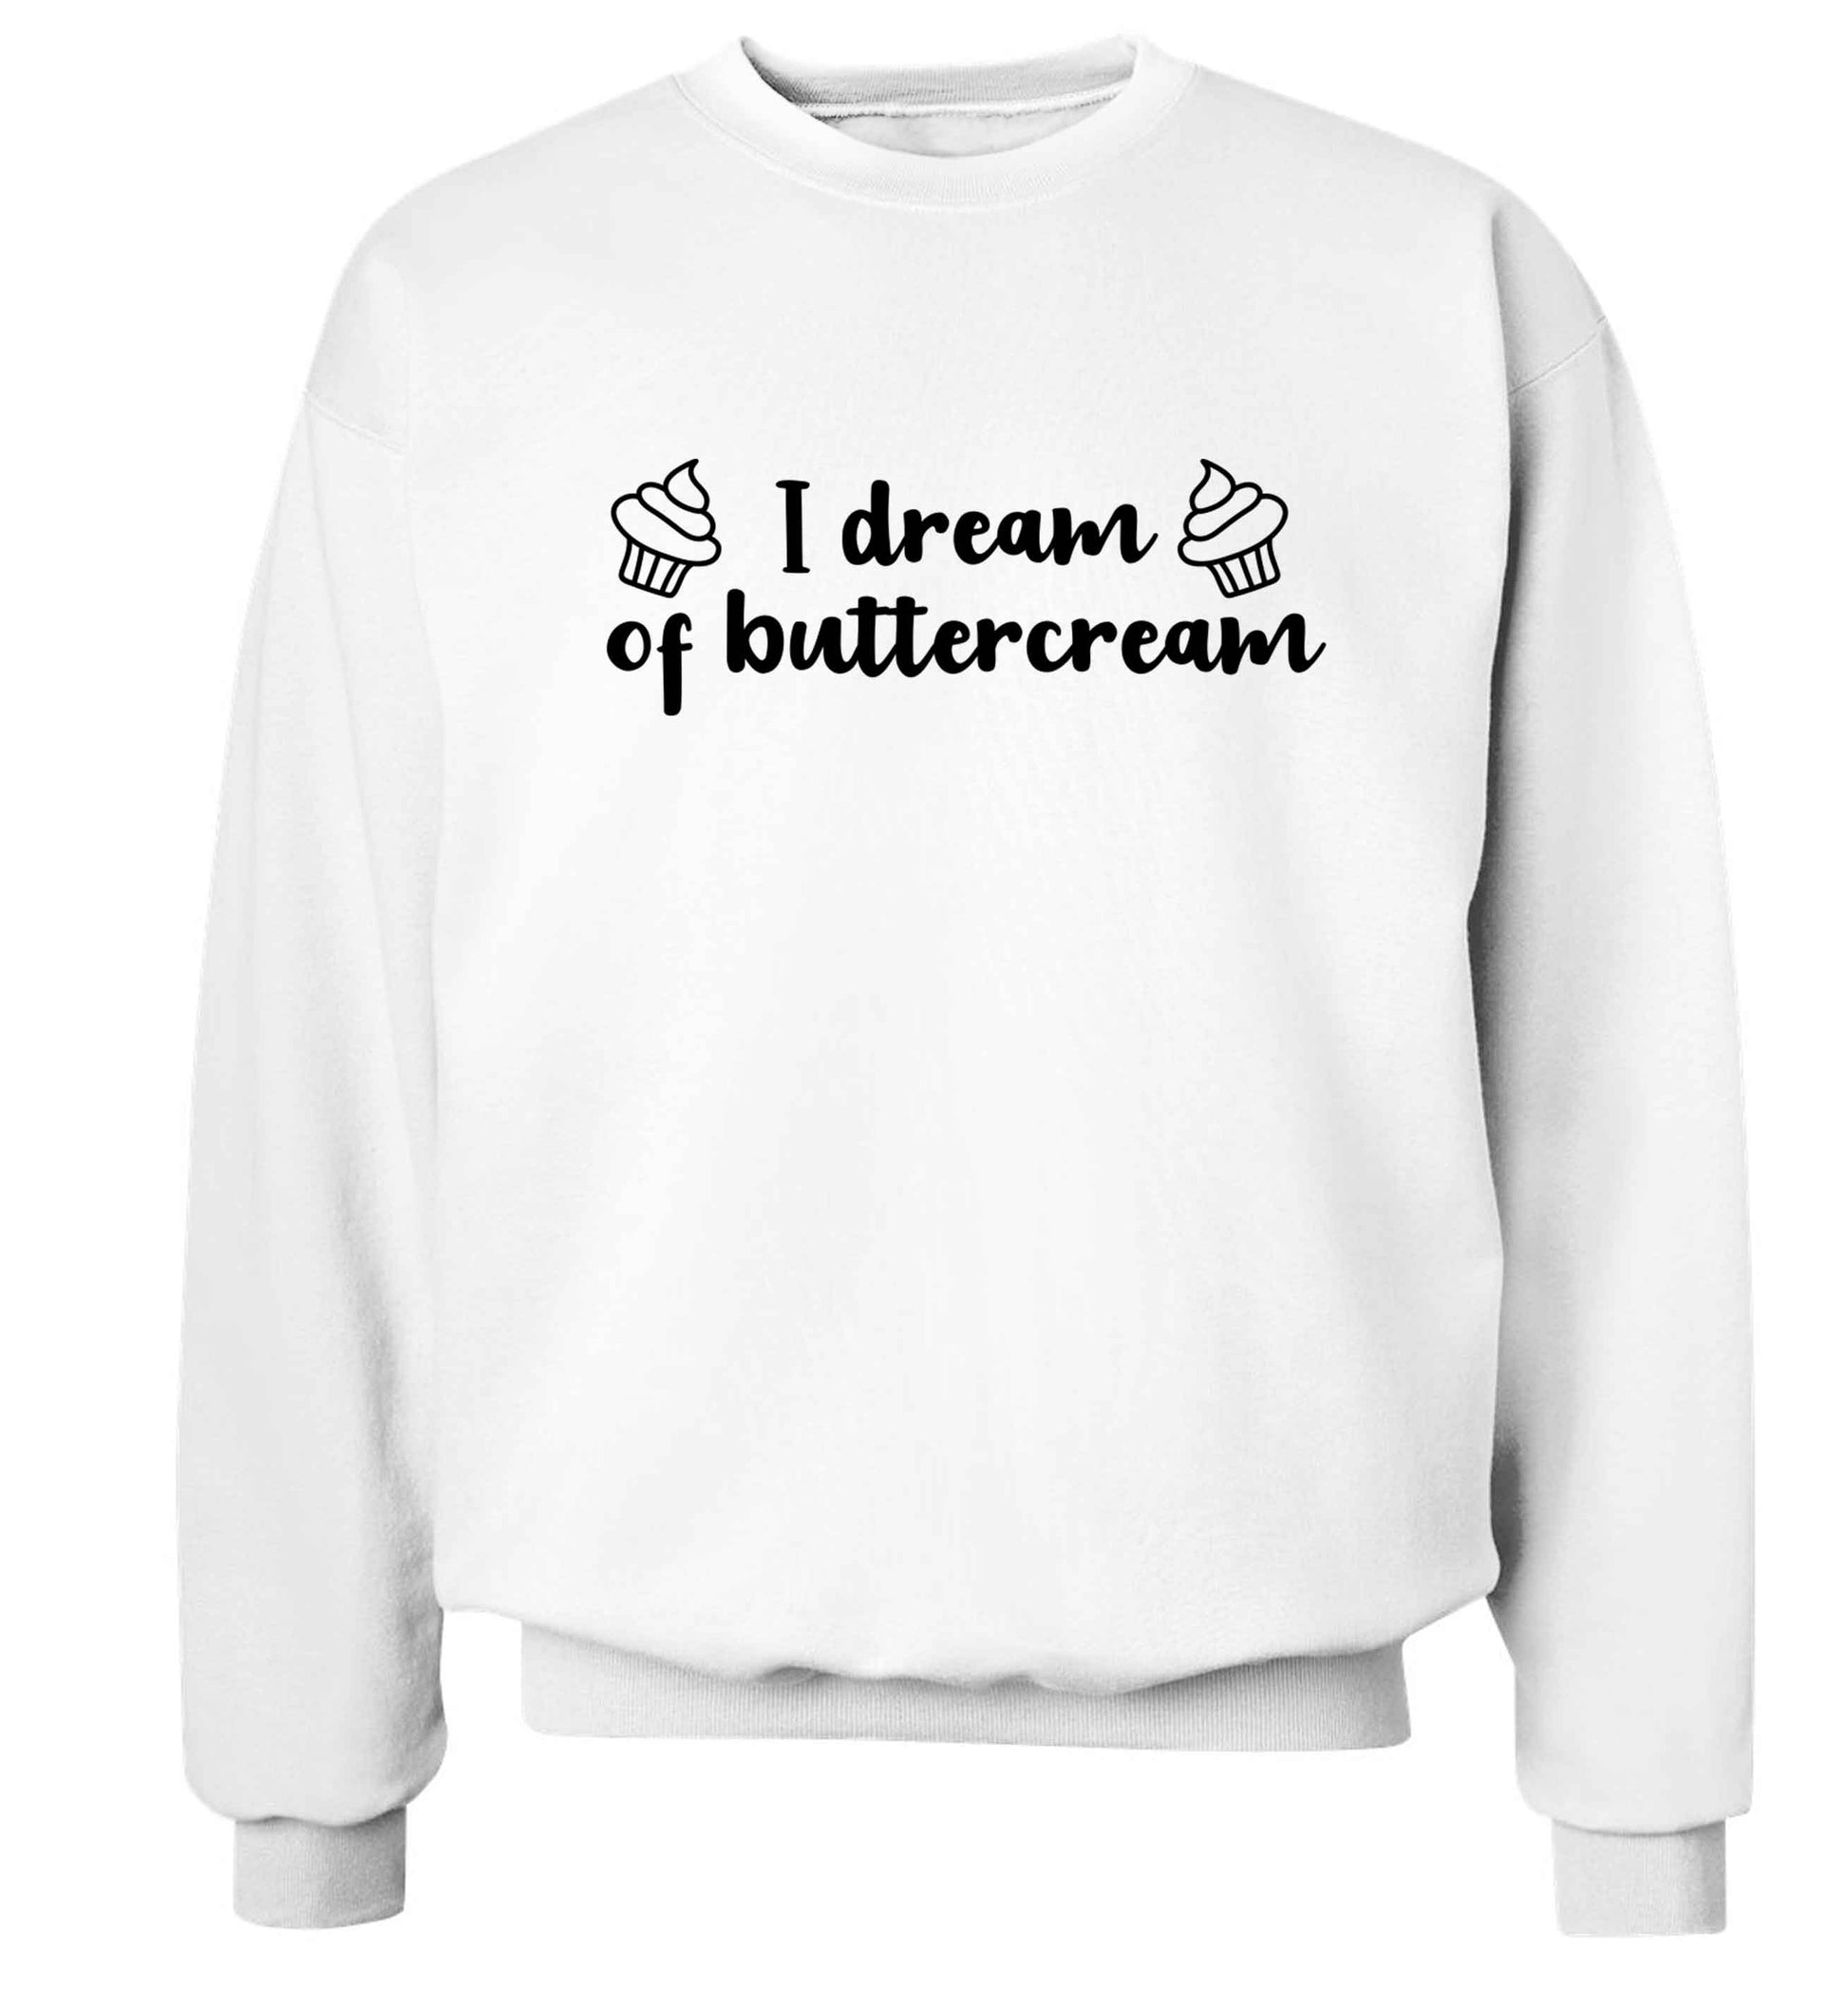 I dream of buttercream Adult's unisex white Sweater 2XL